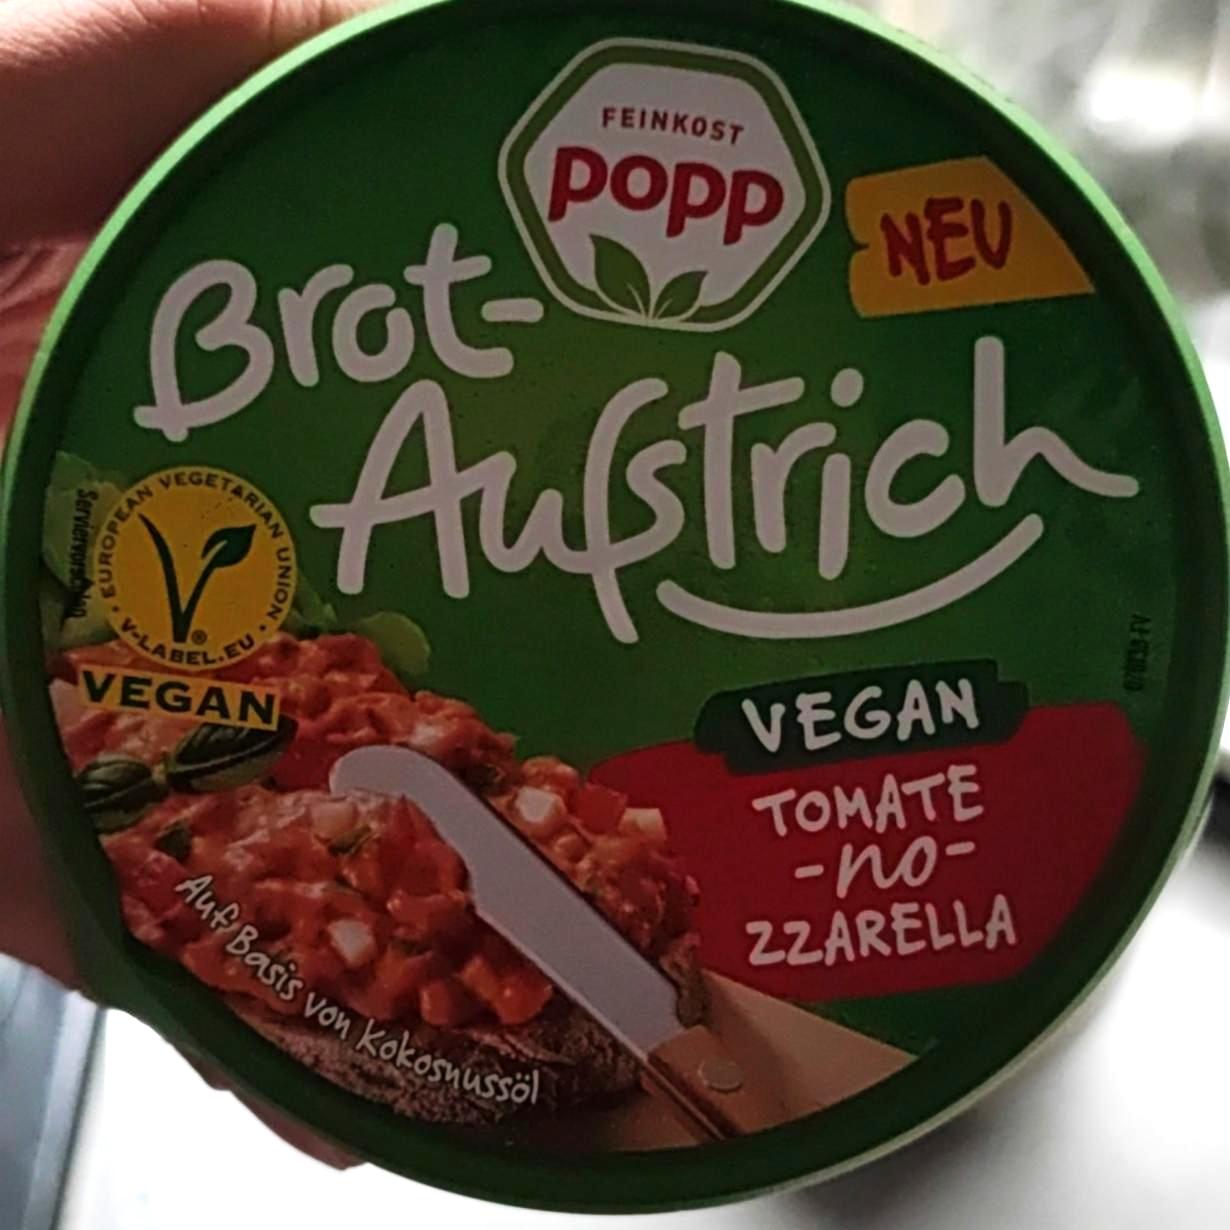 Fotografie - Brot-Aufstrich vegan Tomate-no-zzarella Feinkost popp